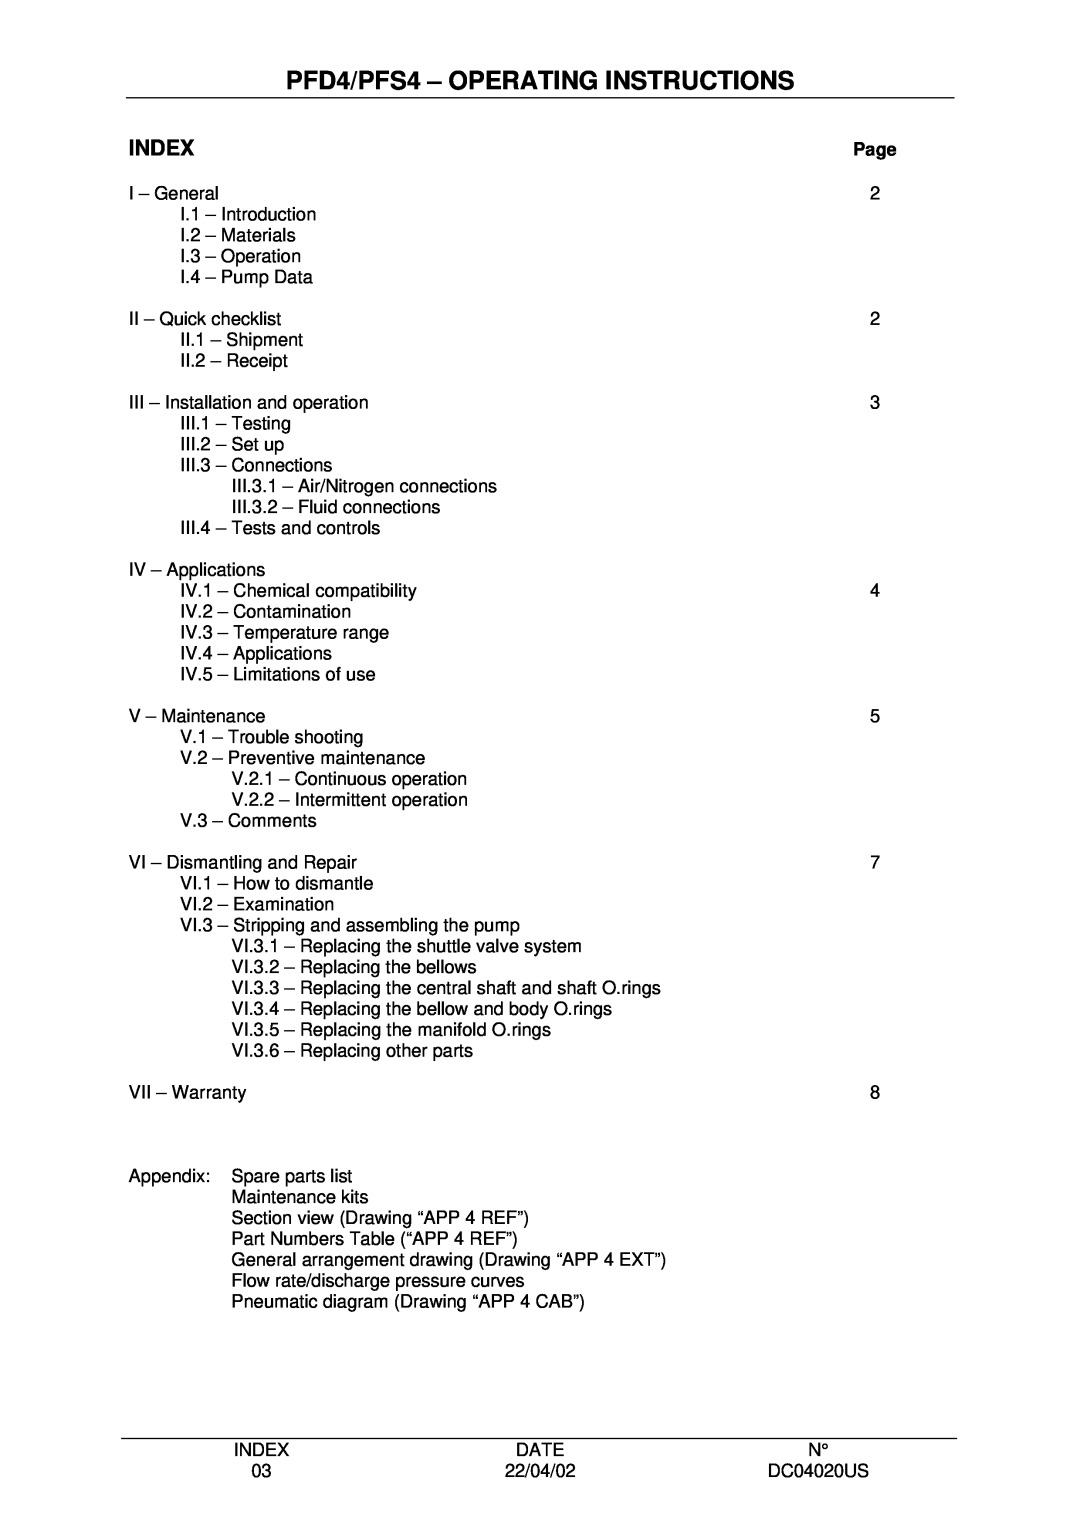 Saint Gobain Vidros manual Index, PFD4/PFS4 - OPERATING INSTRUCTIONS, Page 